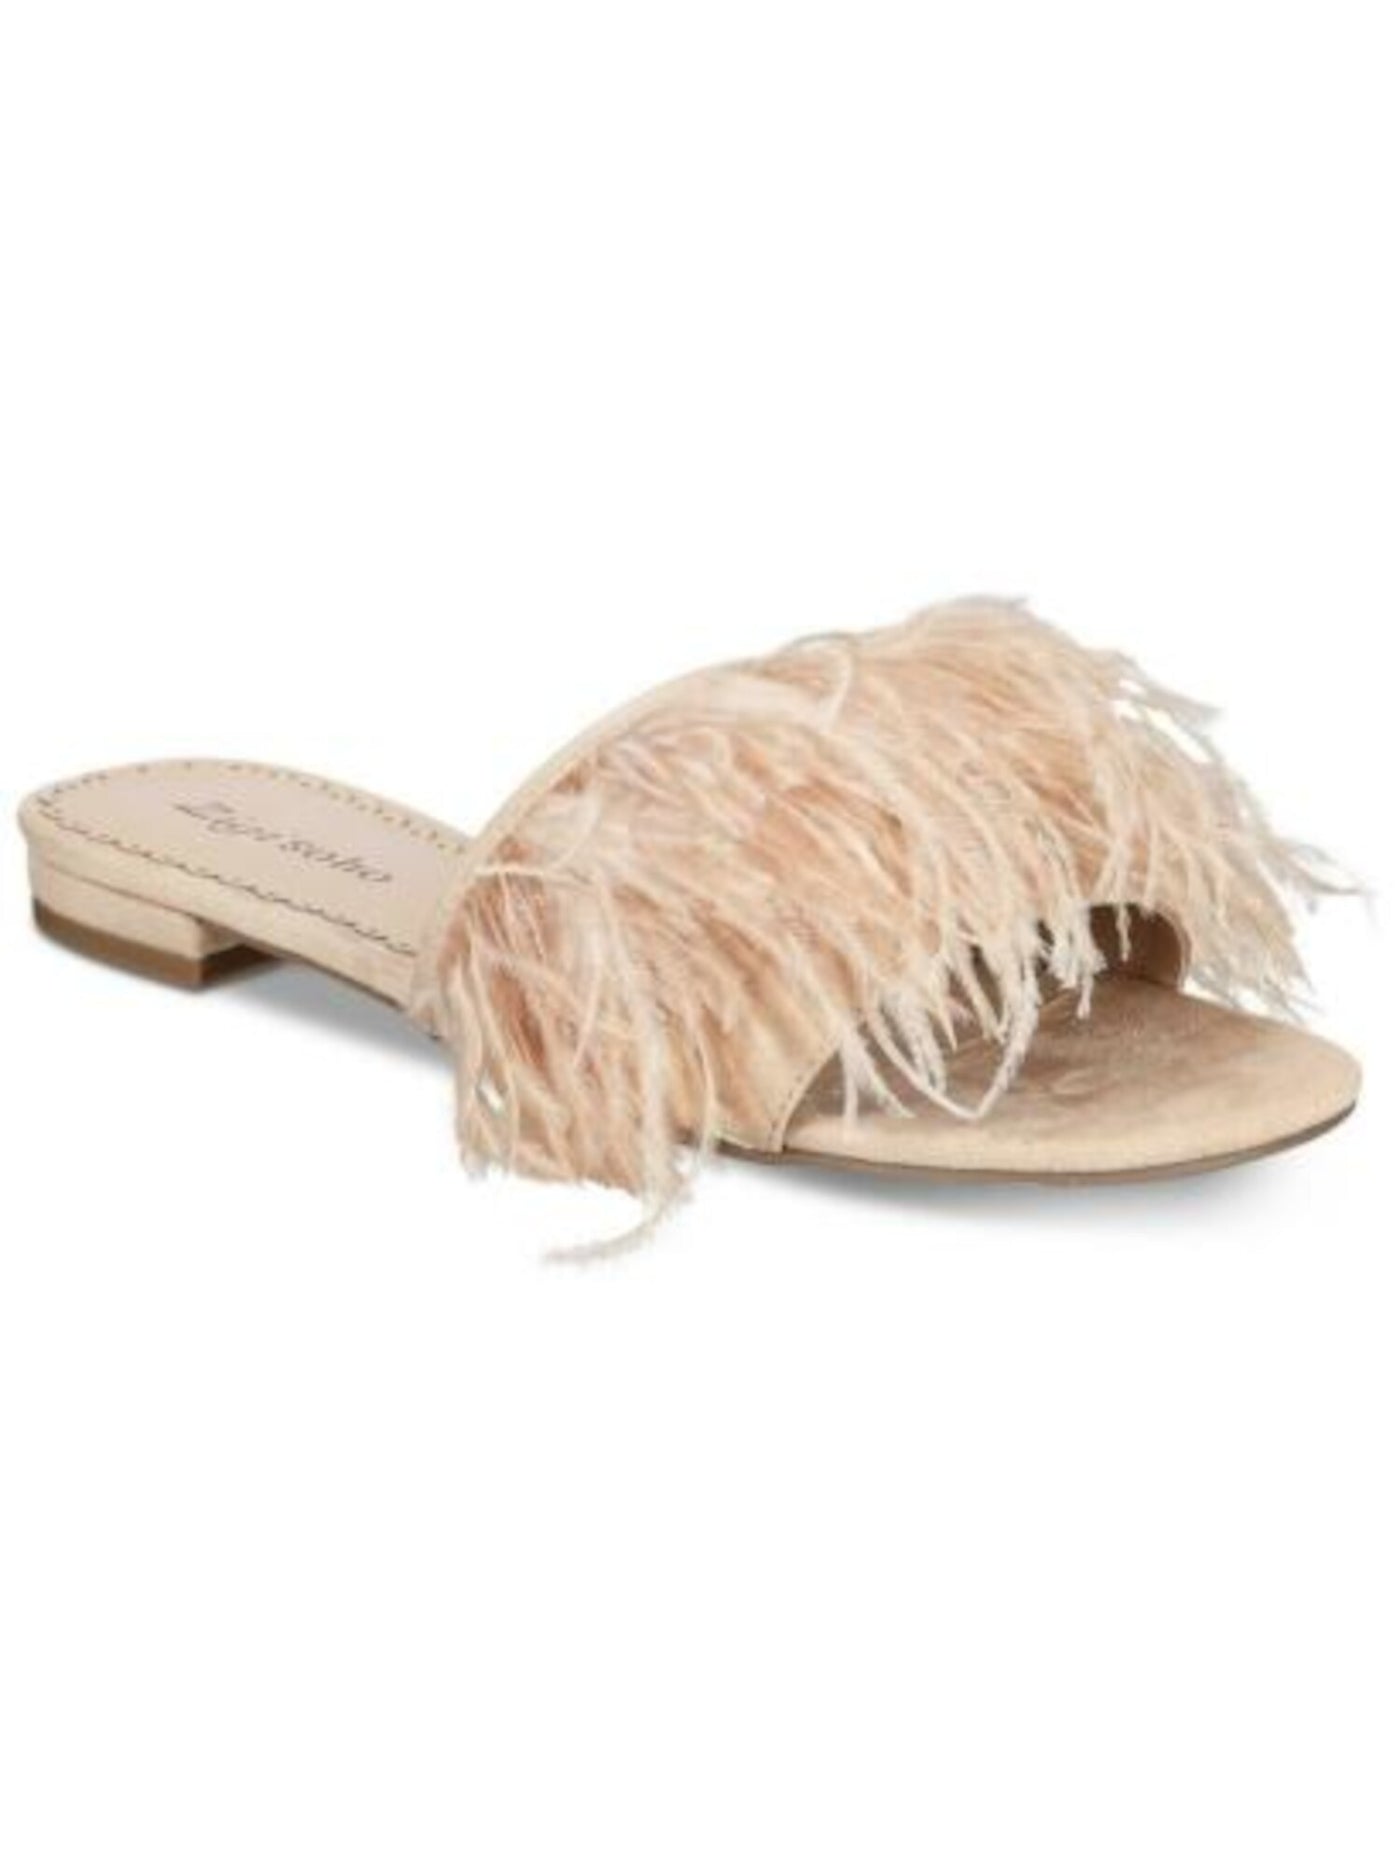 ZIGI SOHO Womens Beige Ostrich Feathers Padded Scalloped Tayla Square Toe Slip On Slide Sandals Shoes 5 M